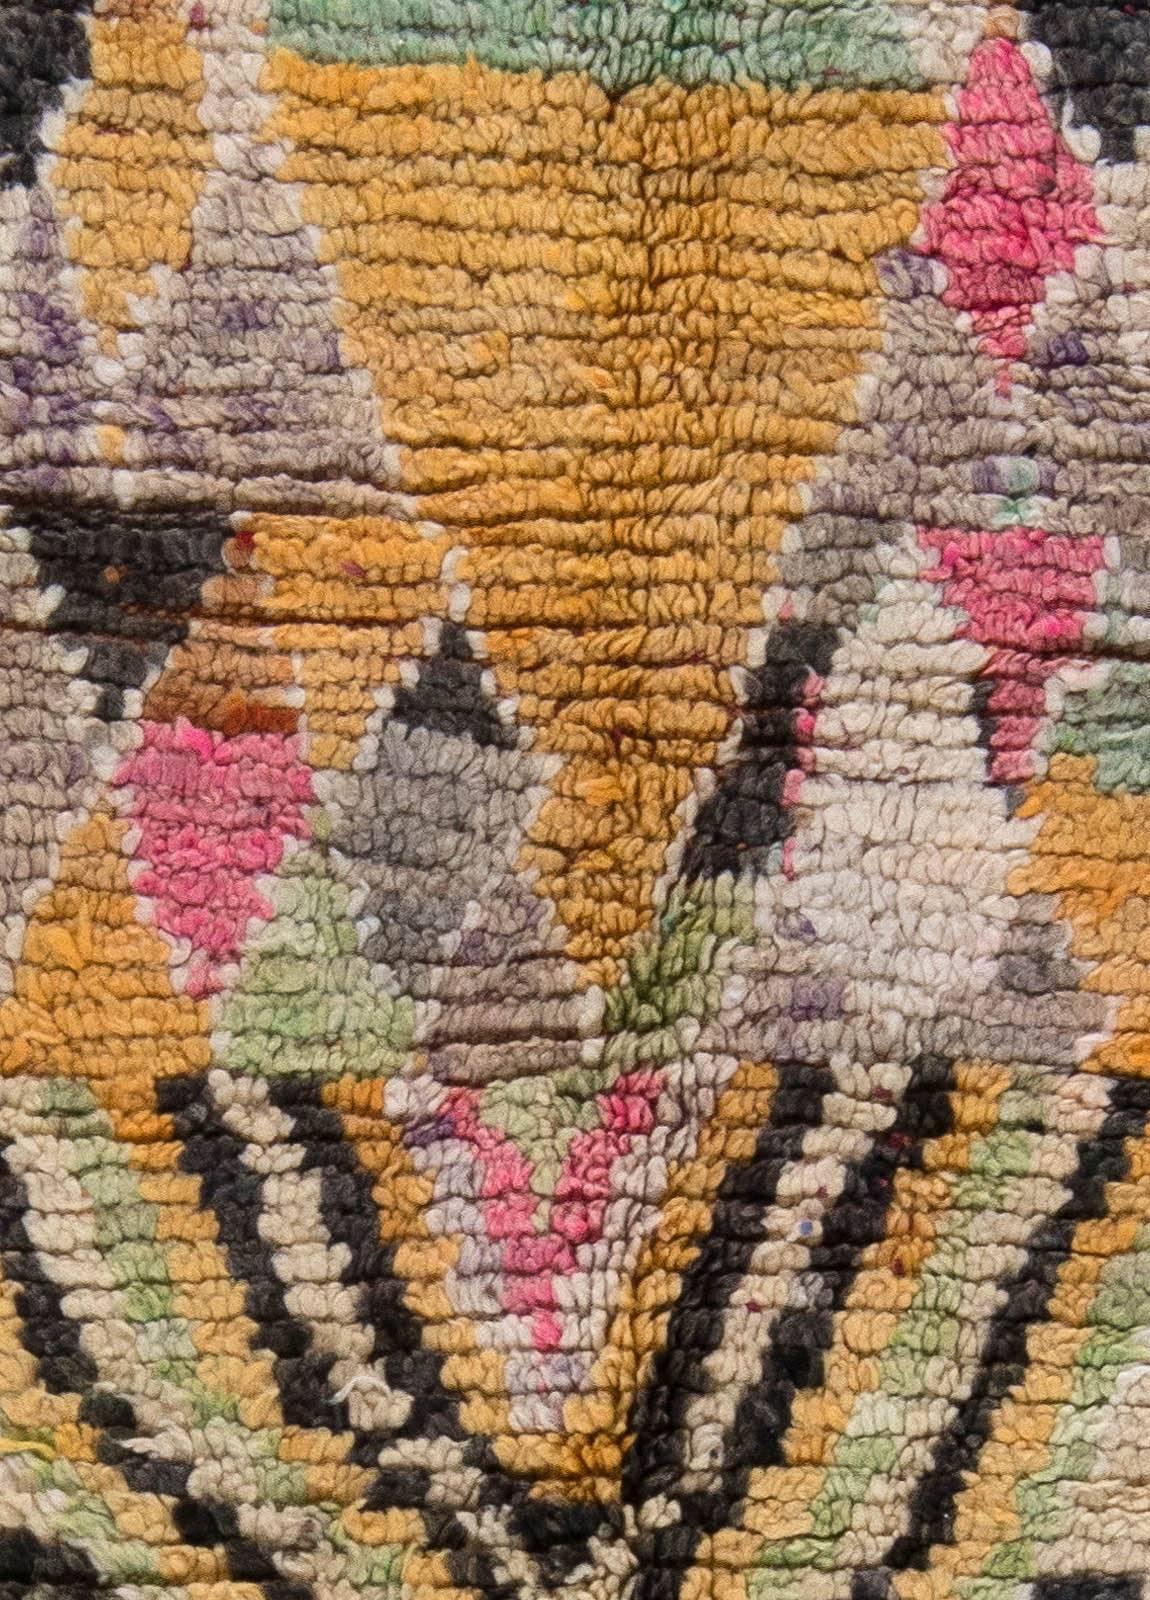 Vintage Moroccan rug
Size: 5'5